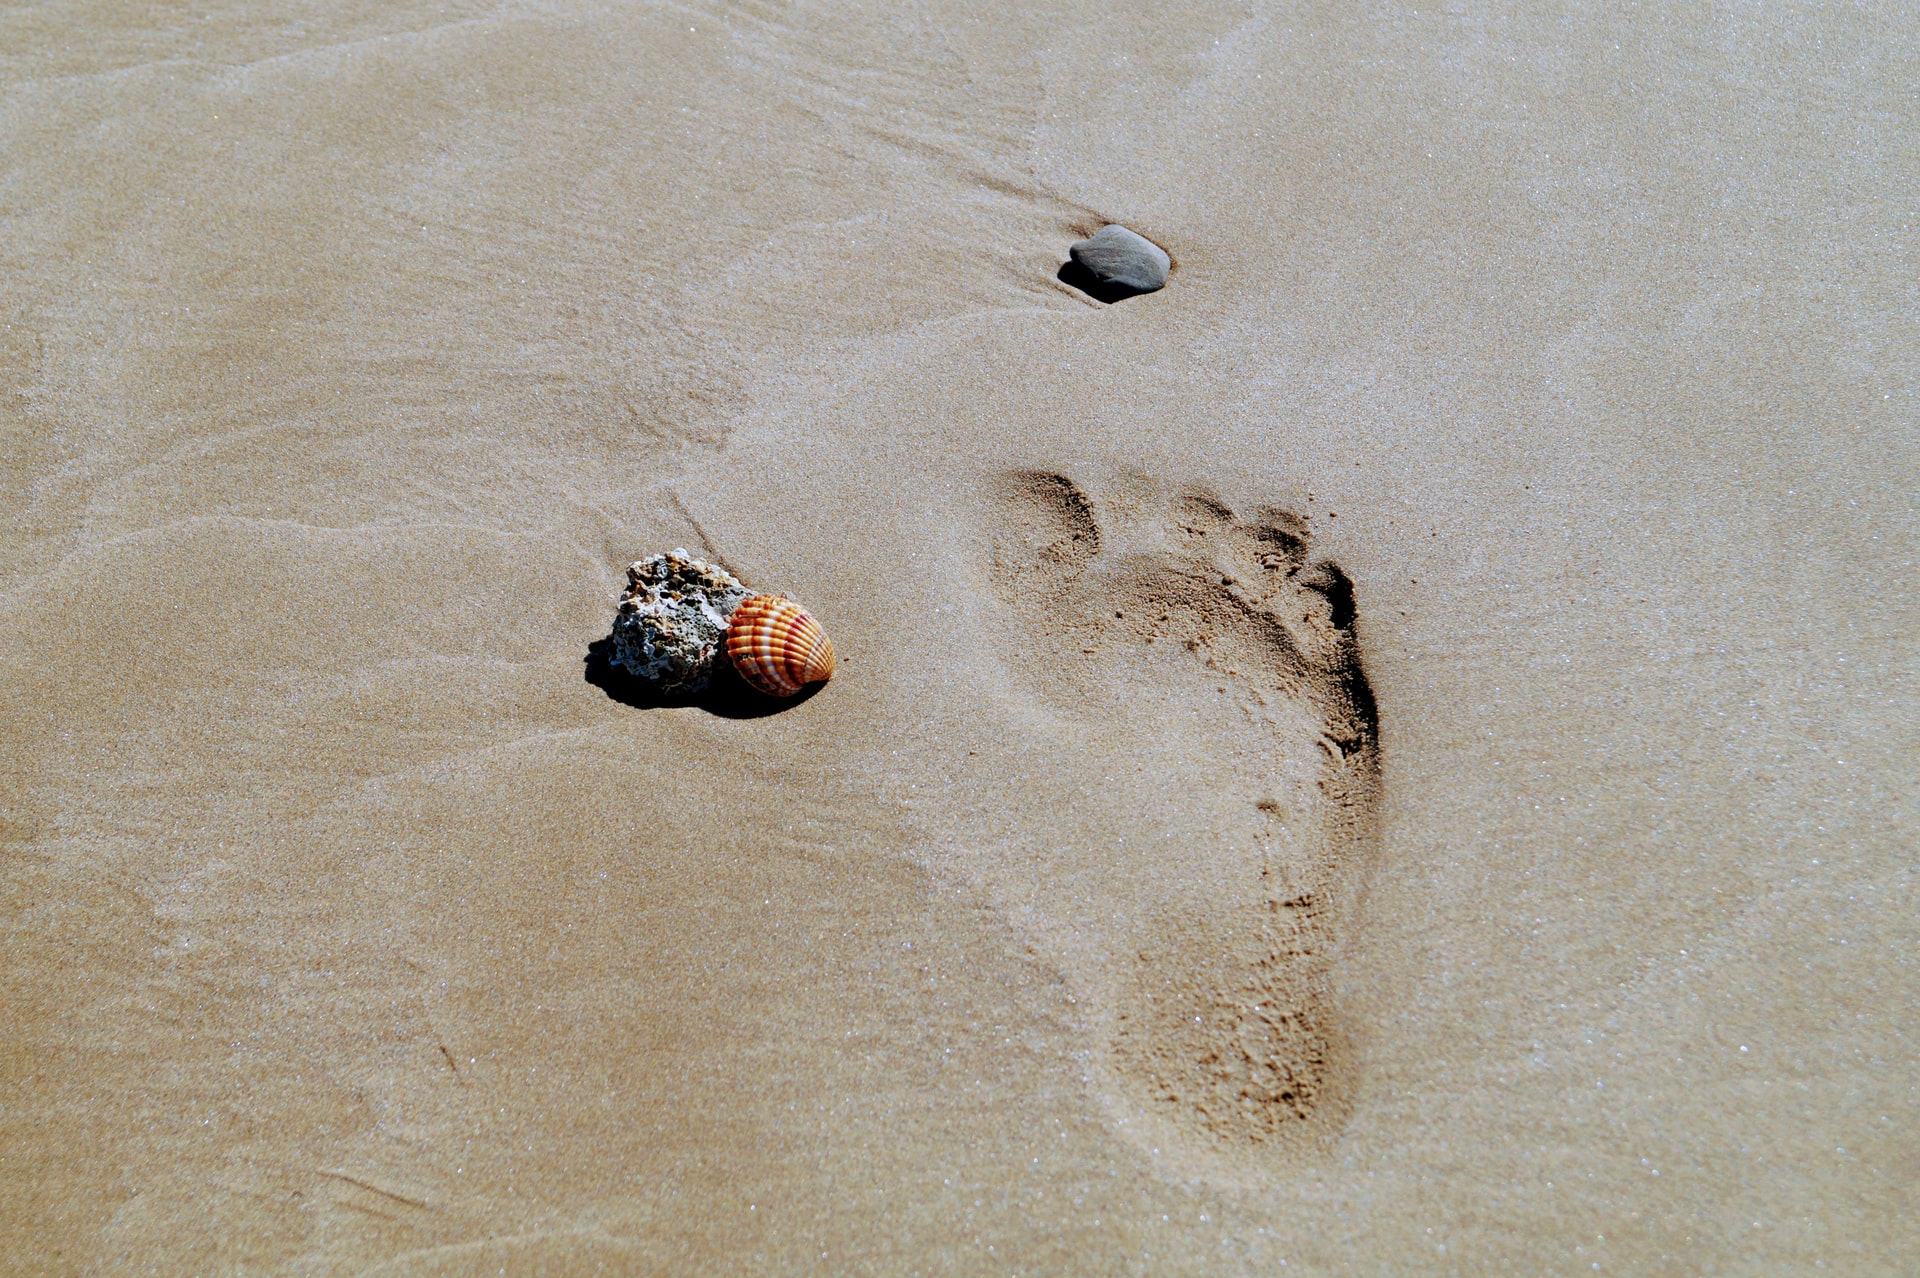 Foot imprint on beach